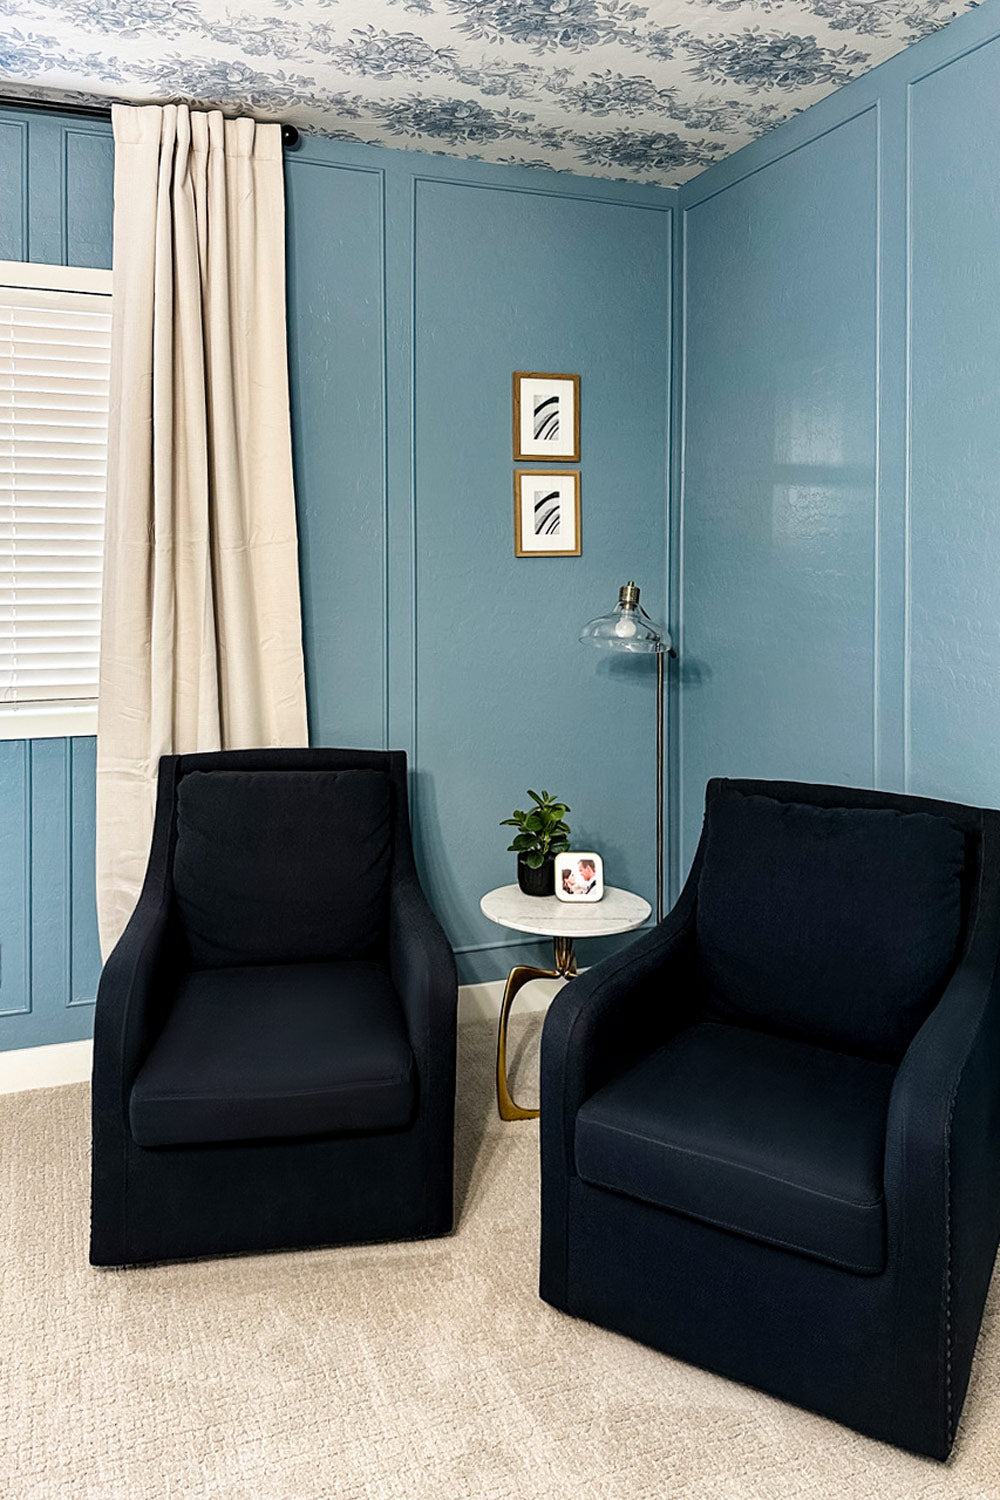 Modern master bedroom interior design featuring removable wallpaper